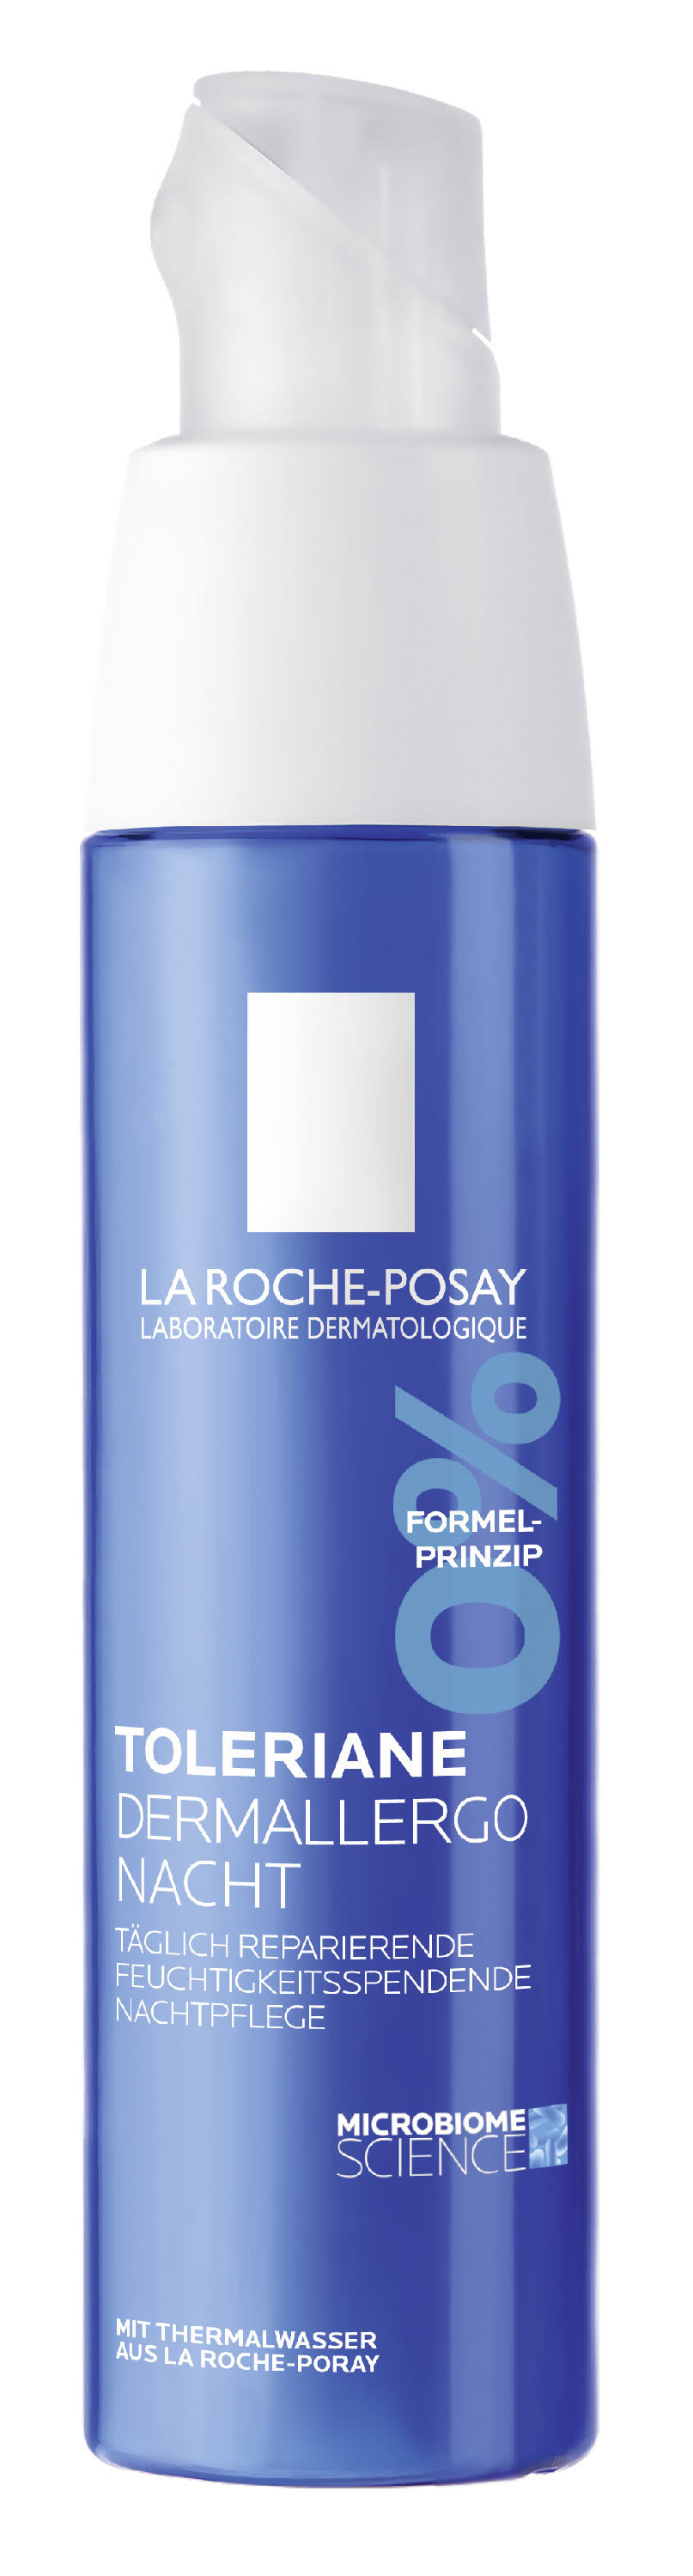 La Roche Posay Toleriane Dermallergo Night - 40 ml